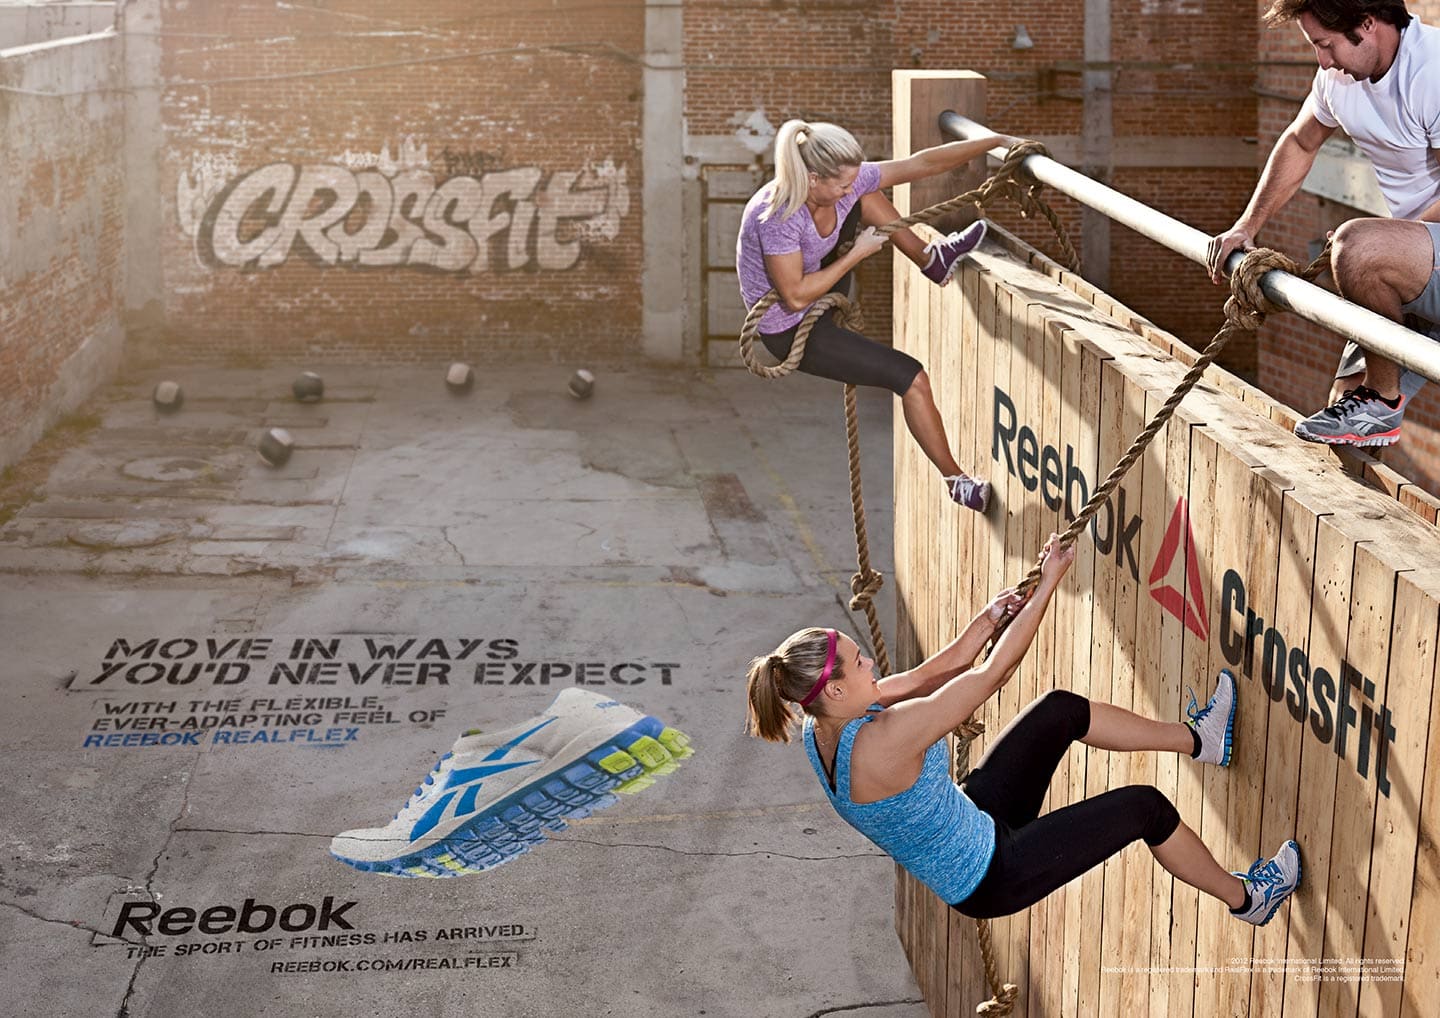 Wall Rope Climb Athletic Crossfit Workout Women Reebok Apparel Advertisement Horizontal